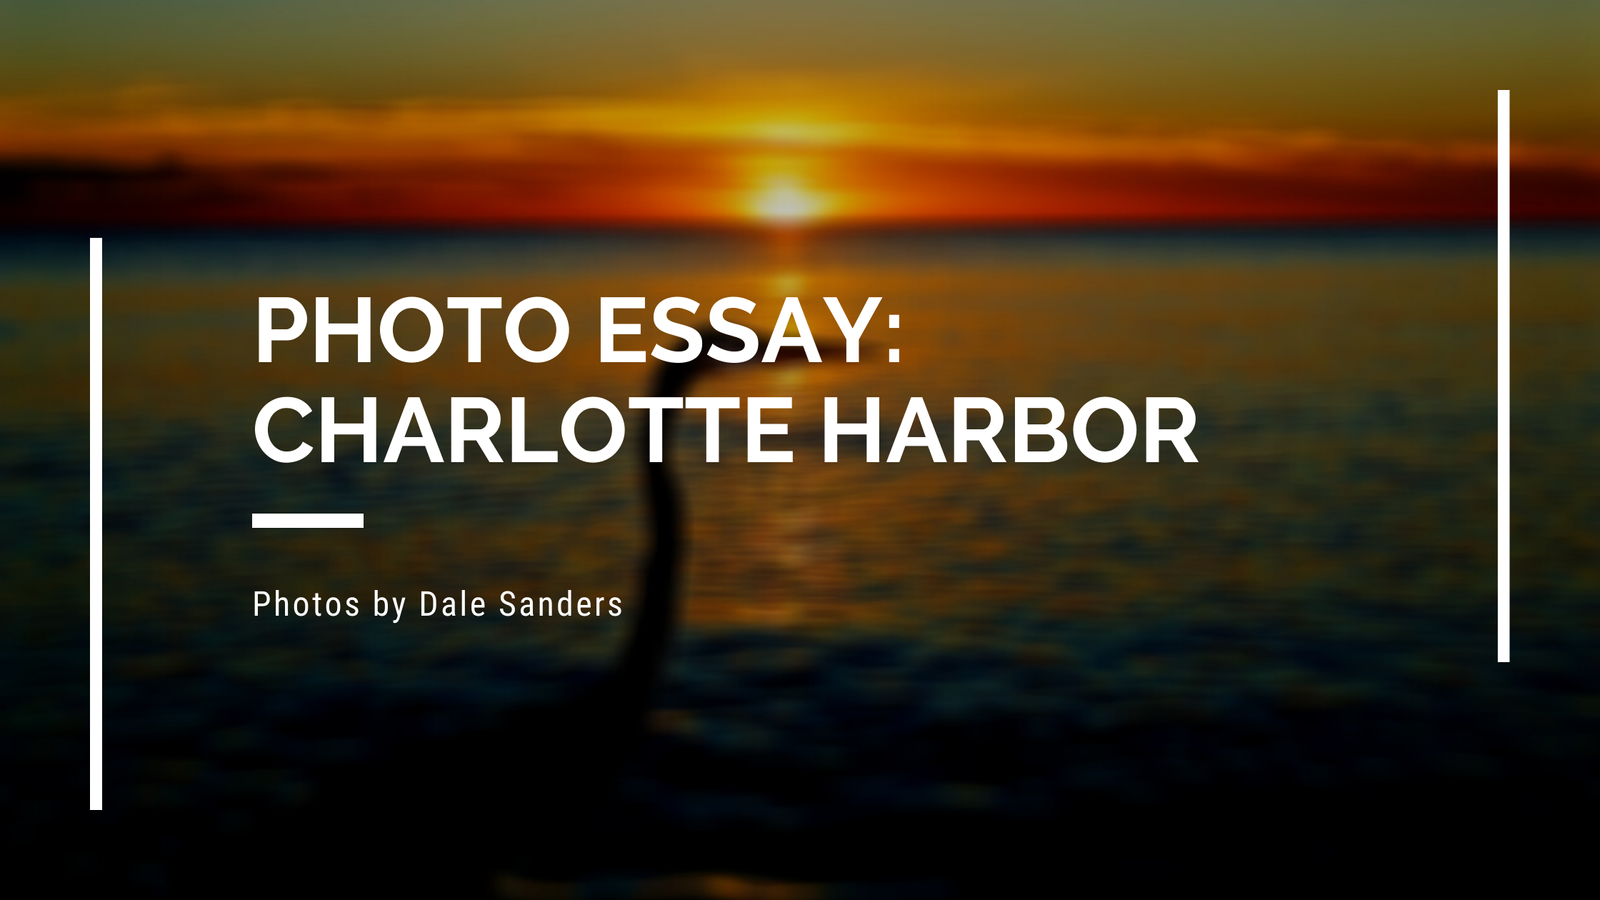 PHOTO ESSAY: Charlotte Harbor